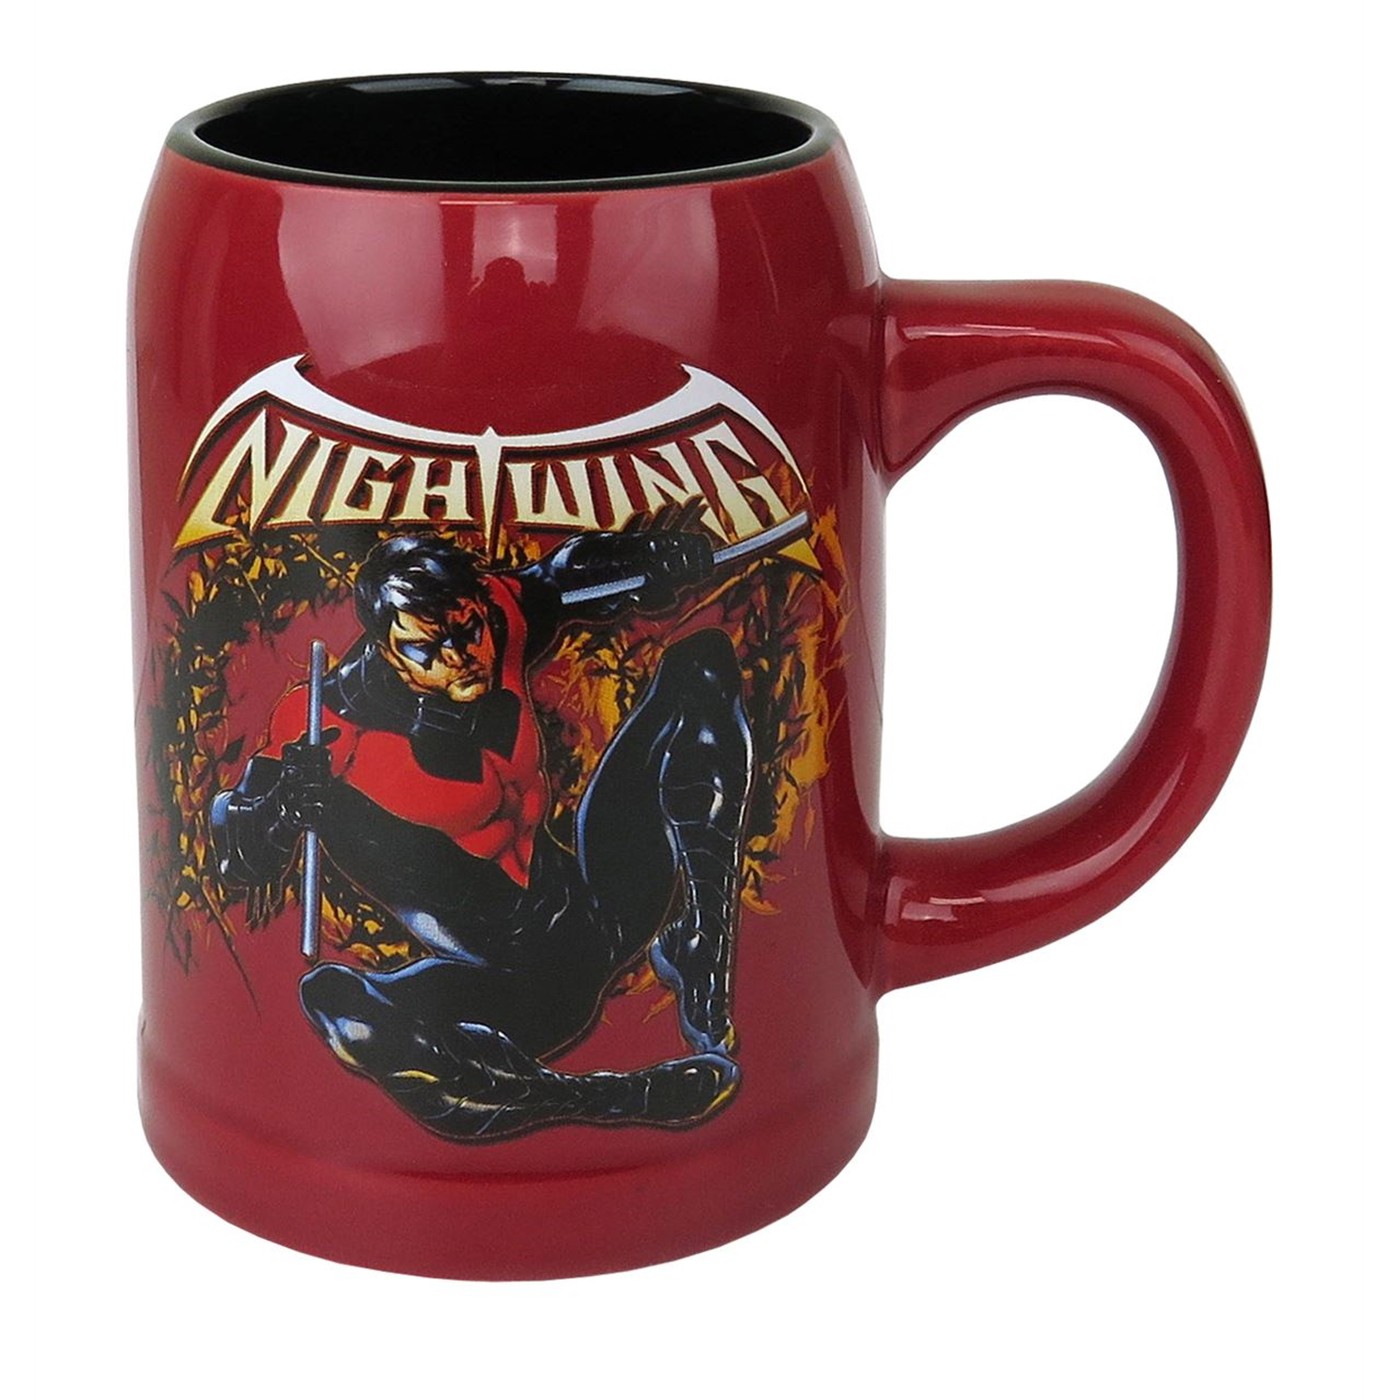 Nightwing 22oz Ceramic Stein Mug